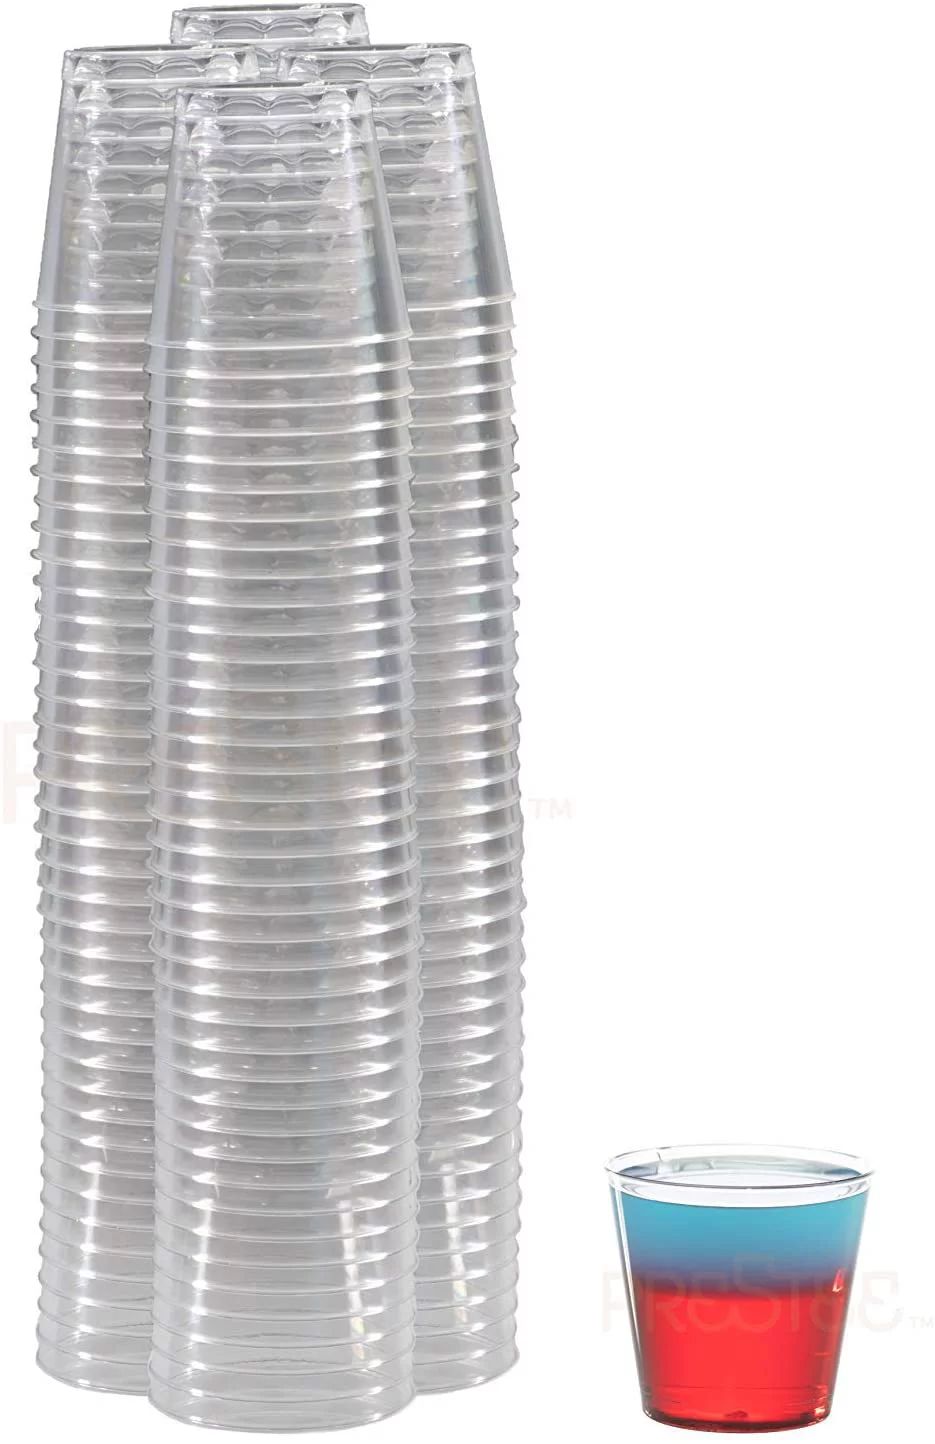 100 Clear Plastic Shot Glasses - 1oz - Ideal For Any Beverage or Celebration | Walmart (US)